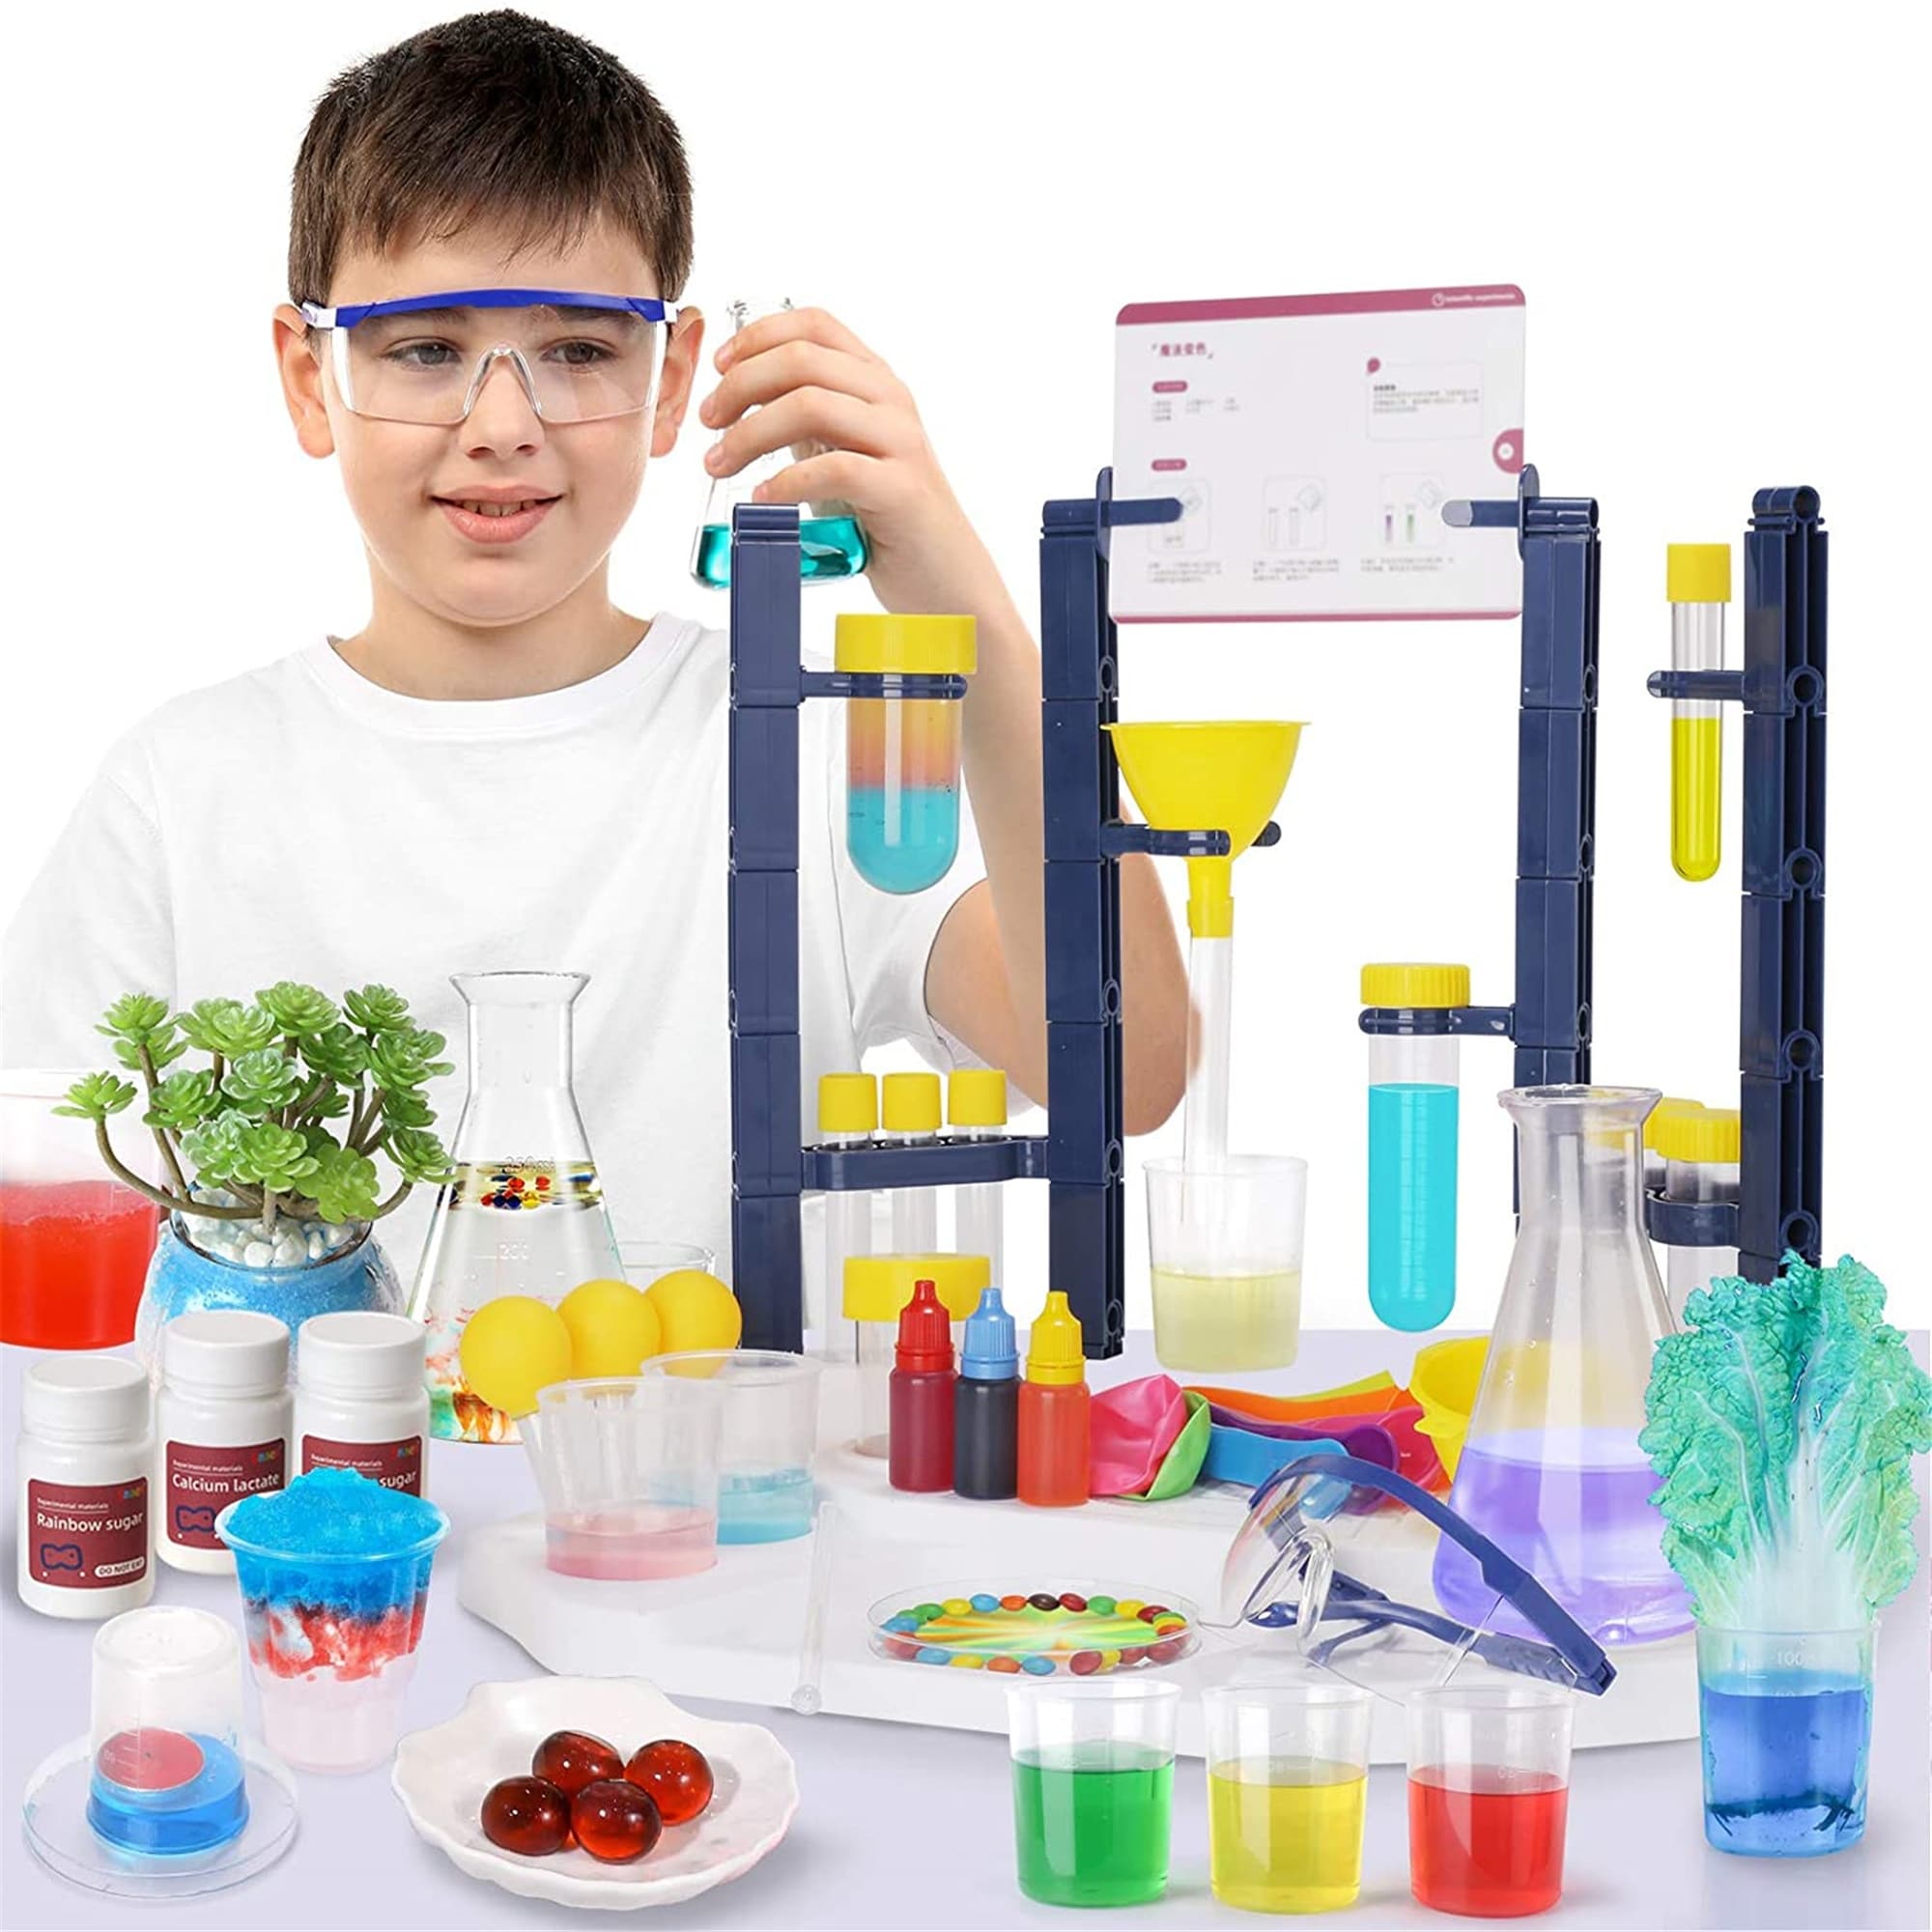 Super Lab Science Kit with 30 Magic Scientific Experiments,STEM